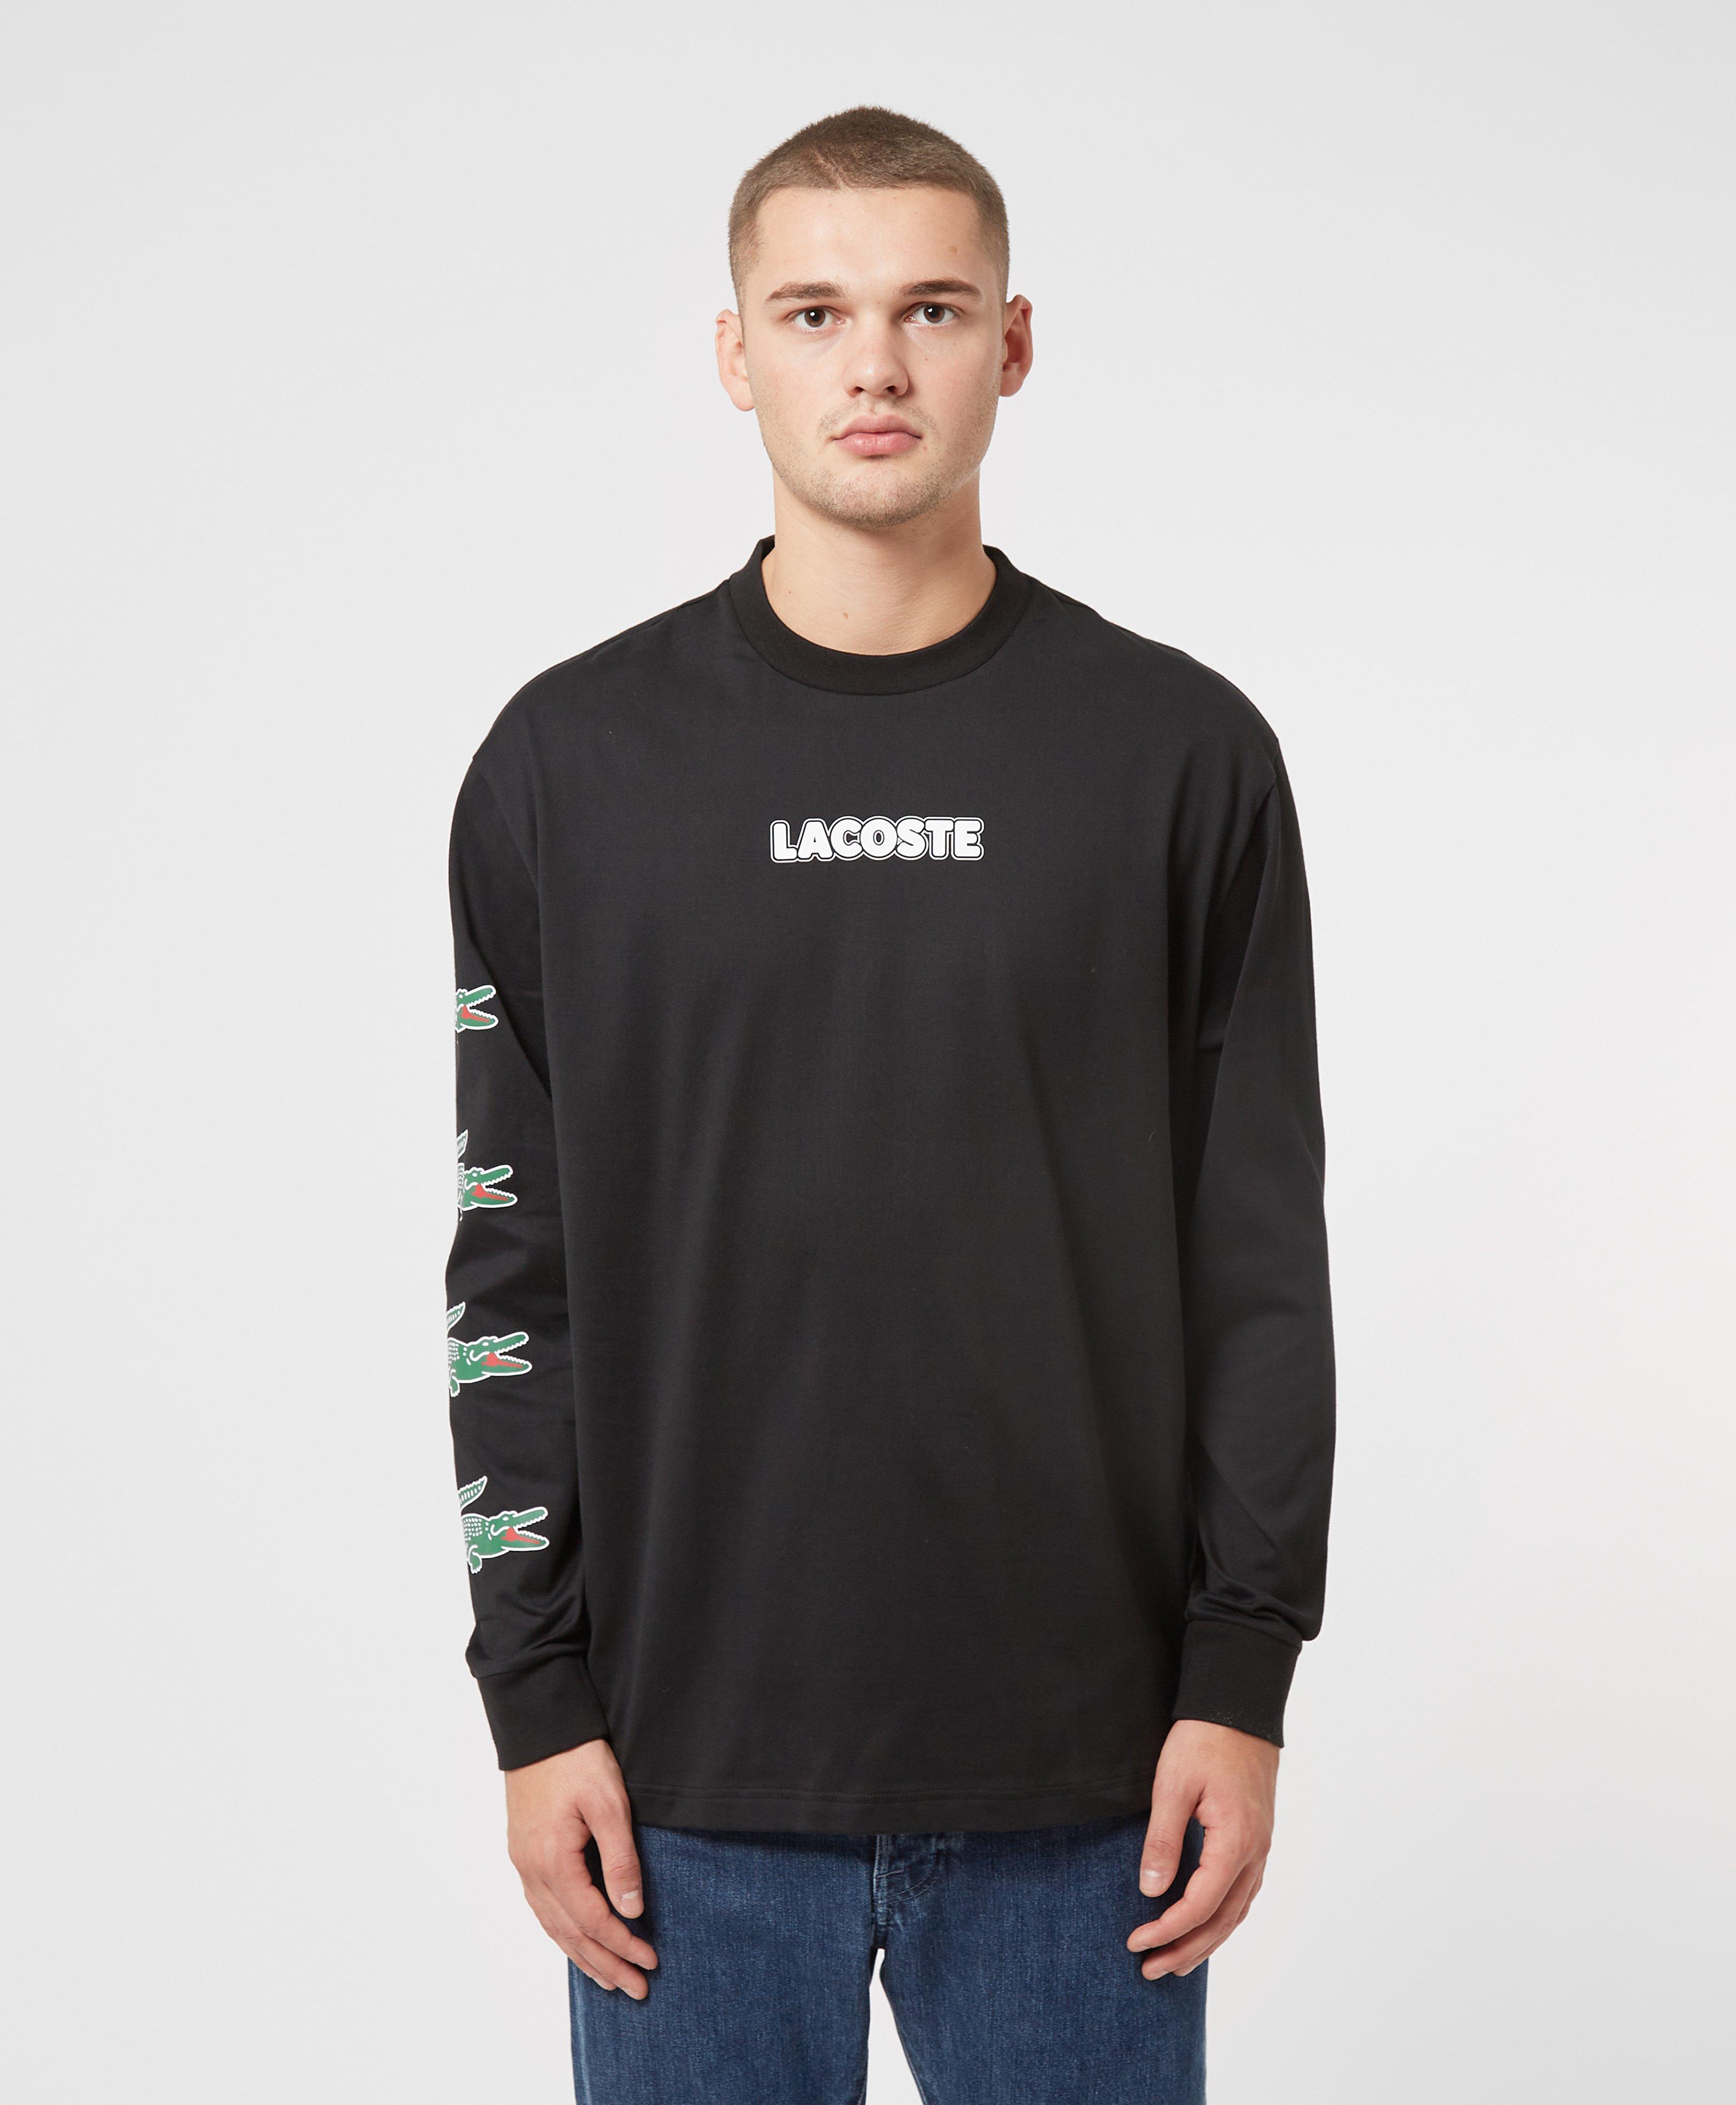 Lacoste Multi Croc Long Sleeve T-shirt in Black for Men - Lyst